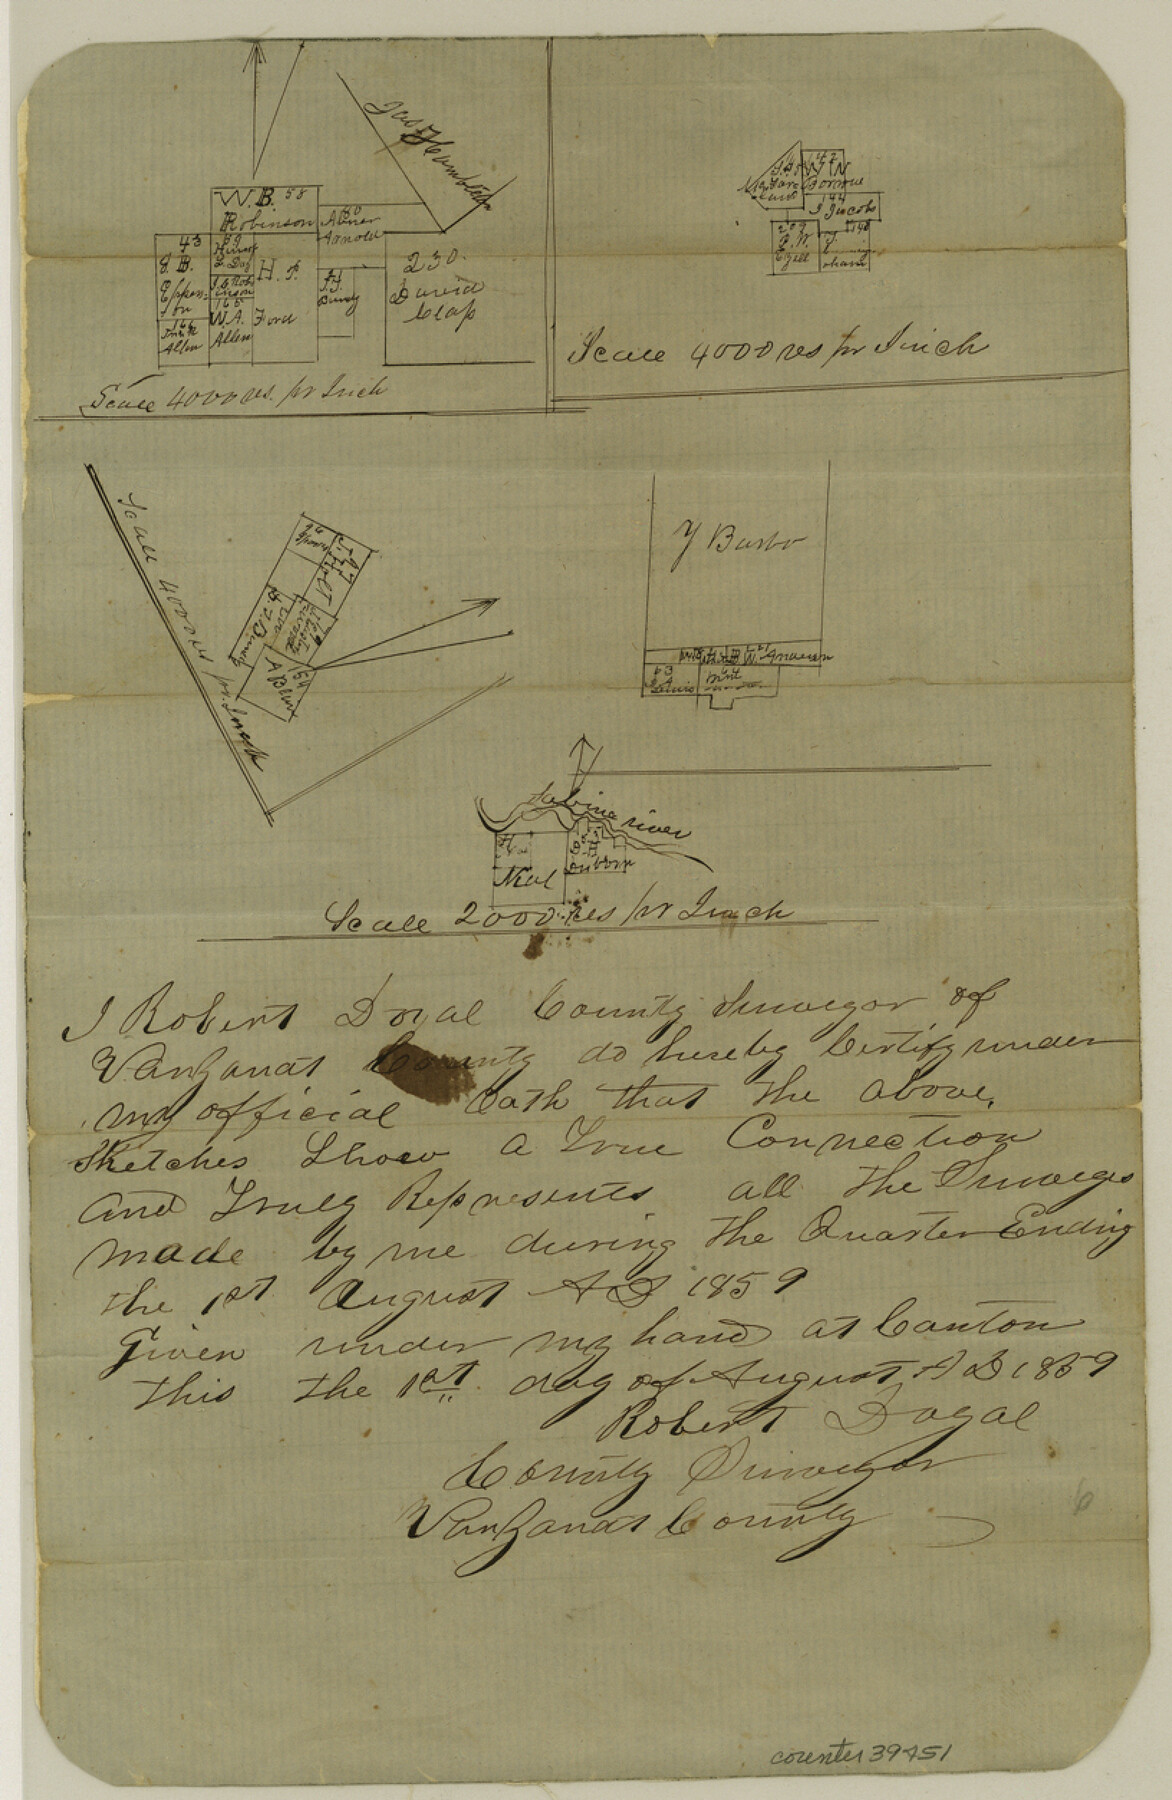 39451, Van Zandt County Sketch File 28, General Map Collection